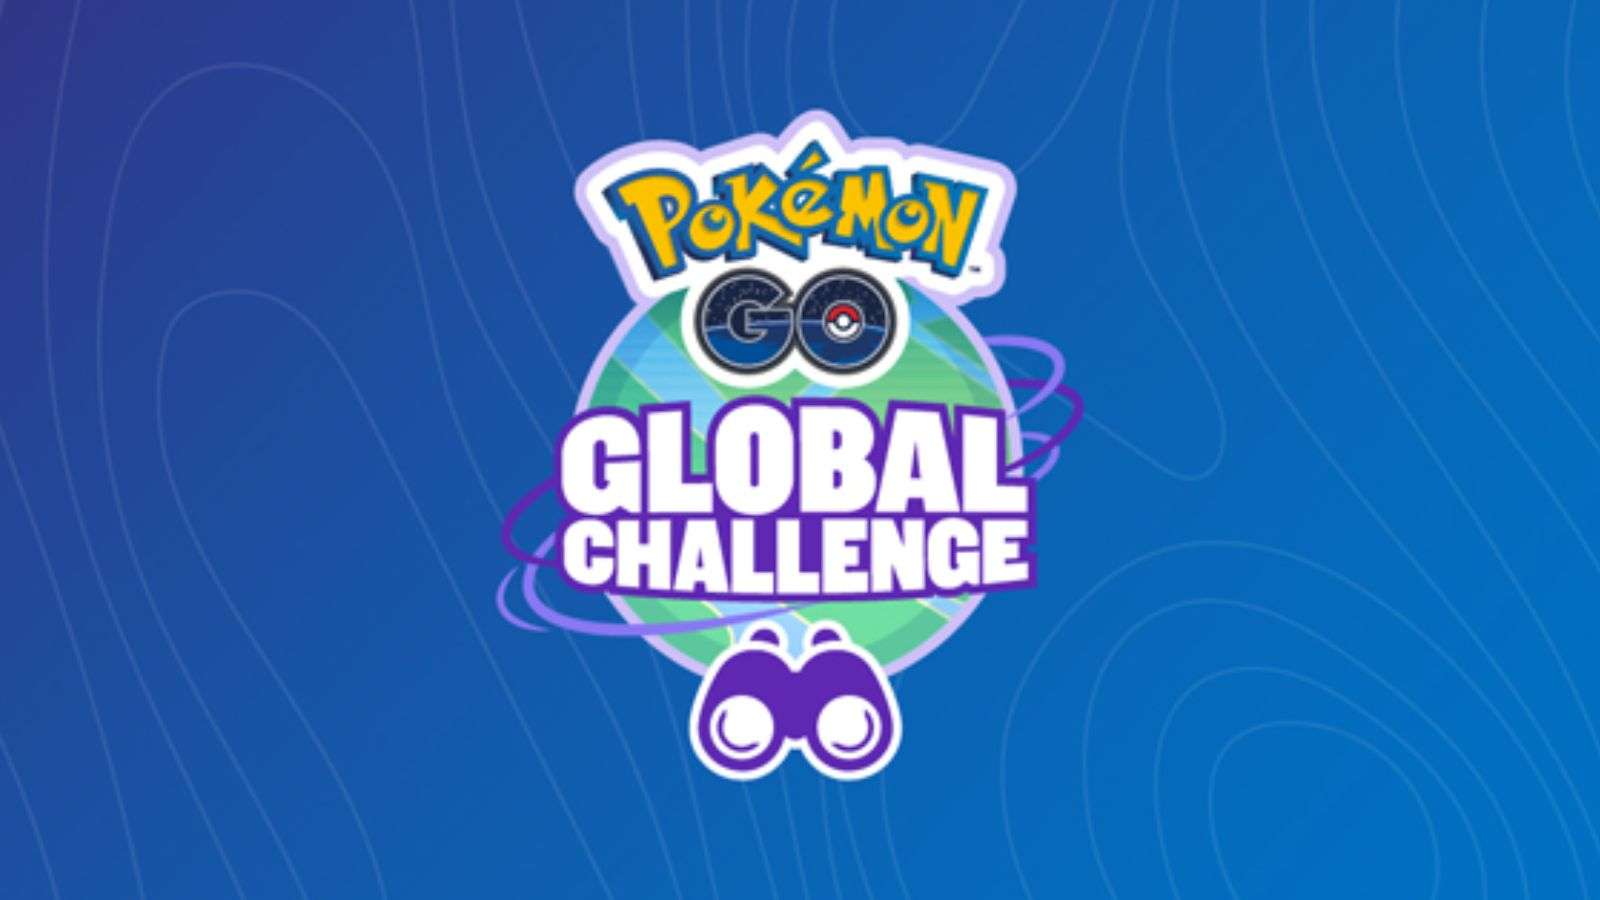 Pokemon Go global challenges